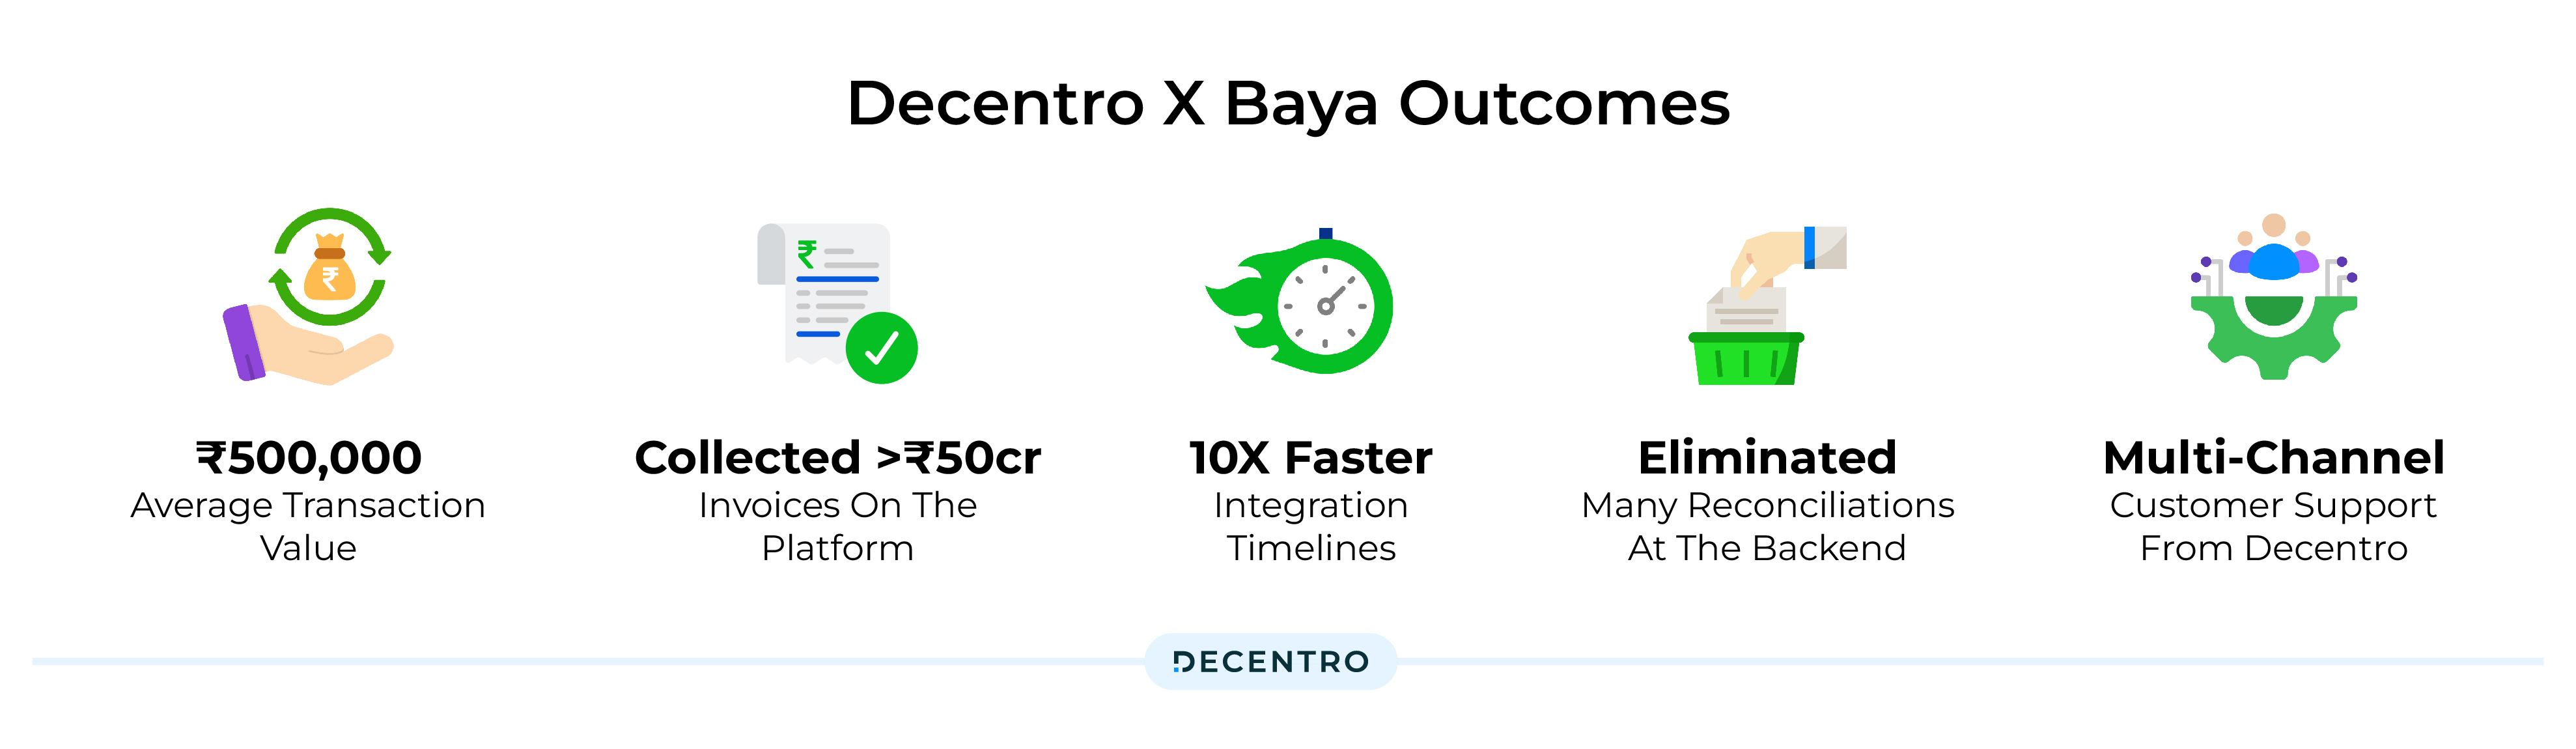 Creative Showcasing the outcomes of Baya X Decentro Partnership